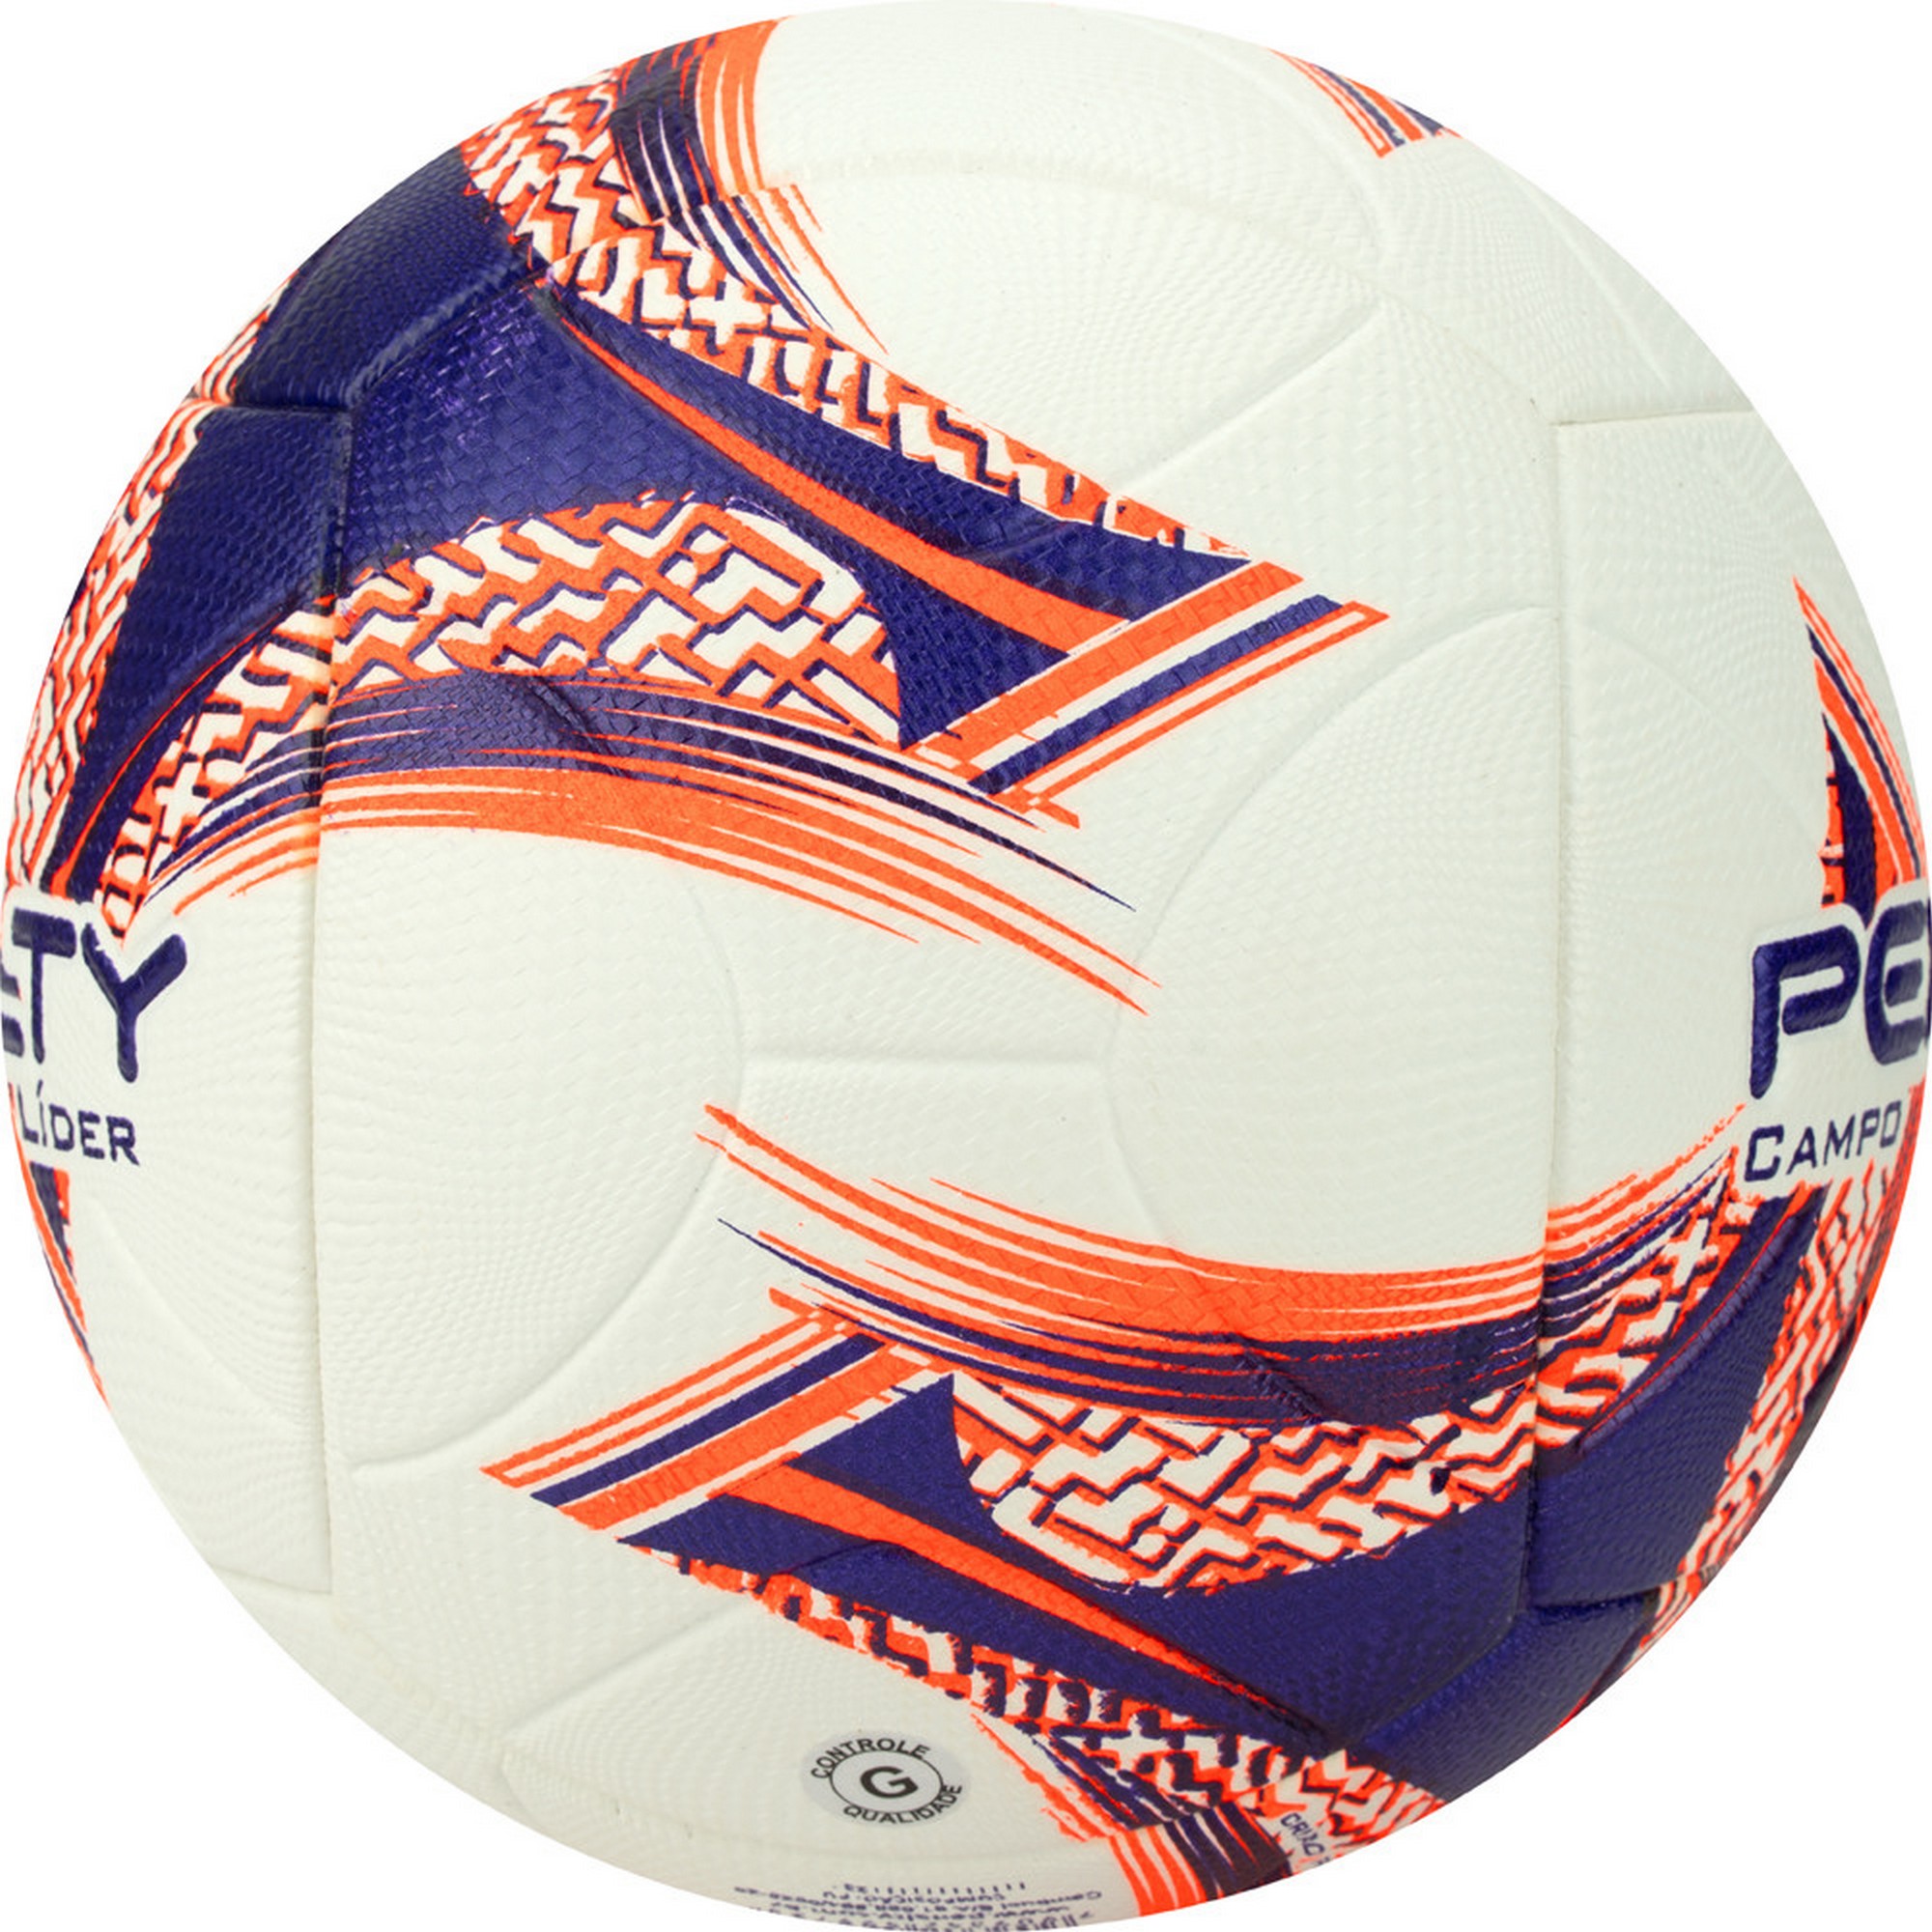 Мяч футбольный Penalty Bola Campo Lider N4 XXIII 5213401239-U р.4 2000_2000